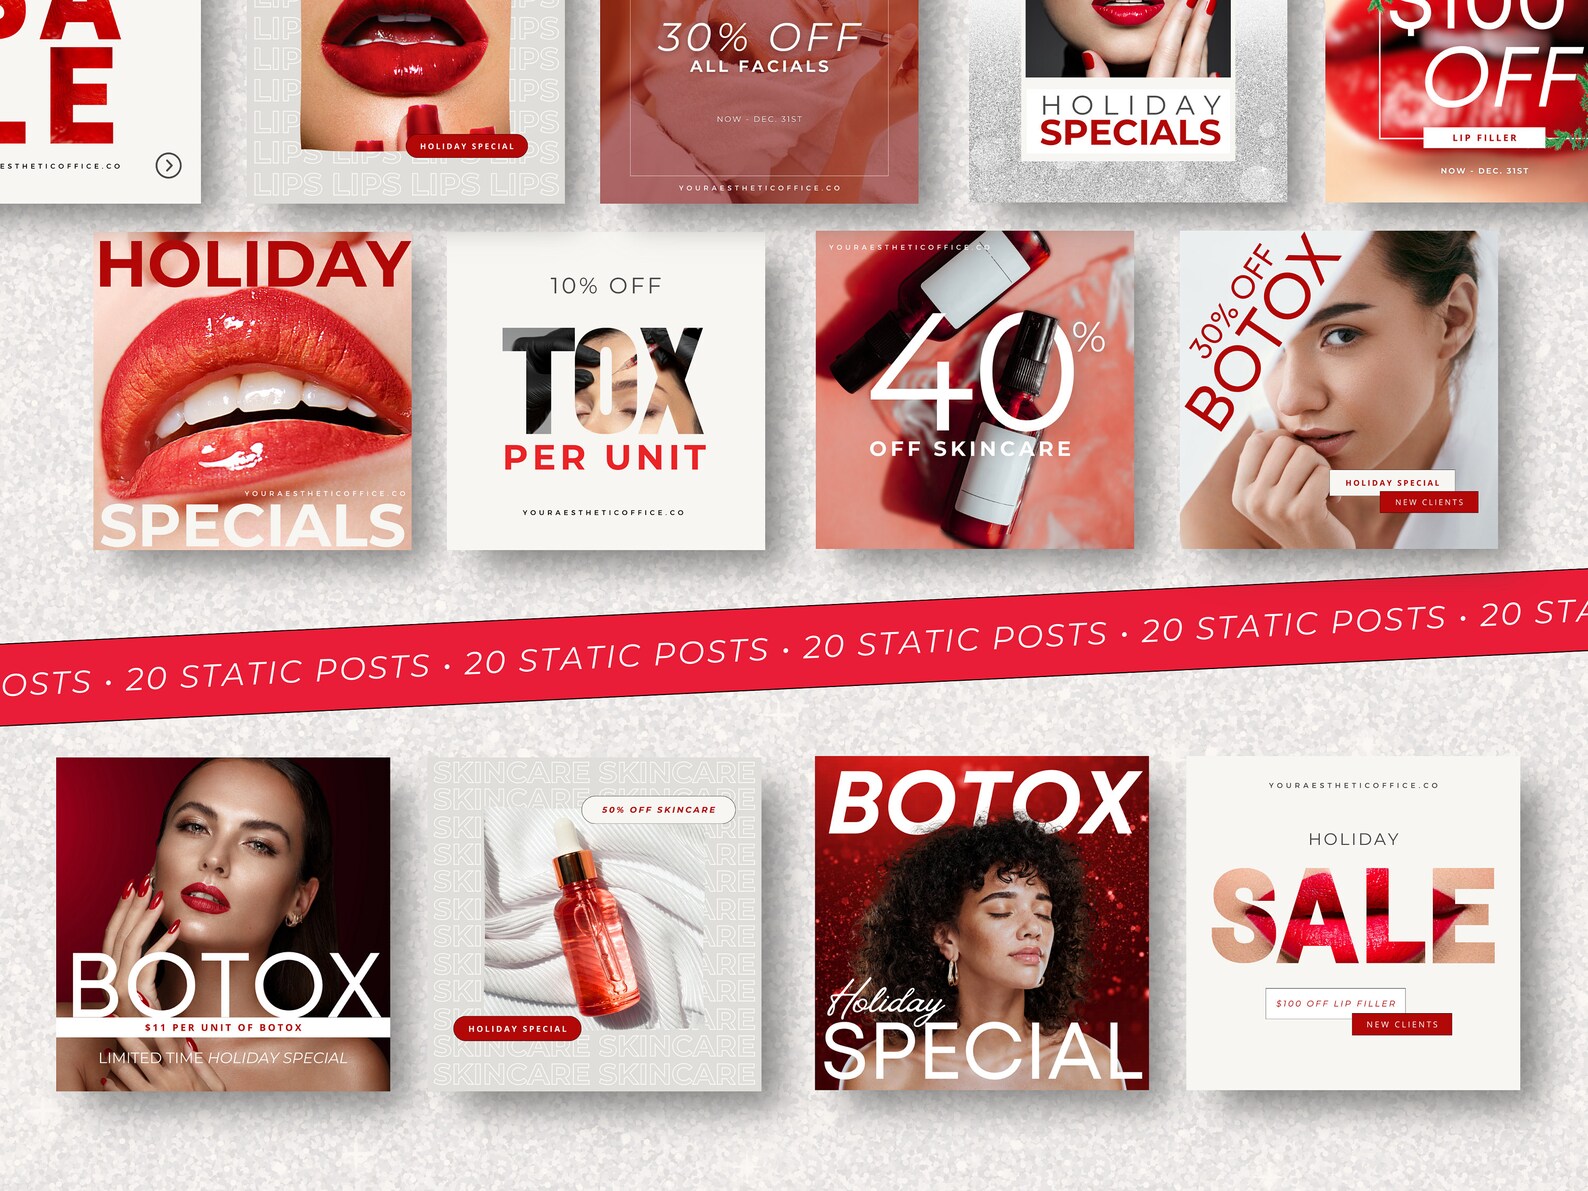 45 Holiday Medspa Ad Templates, Christmas Botox Ad Canva Template ...